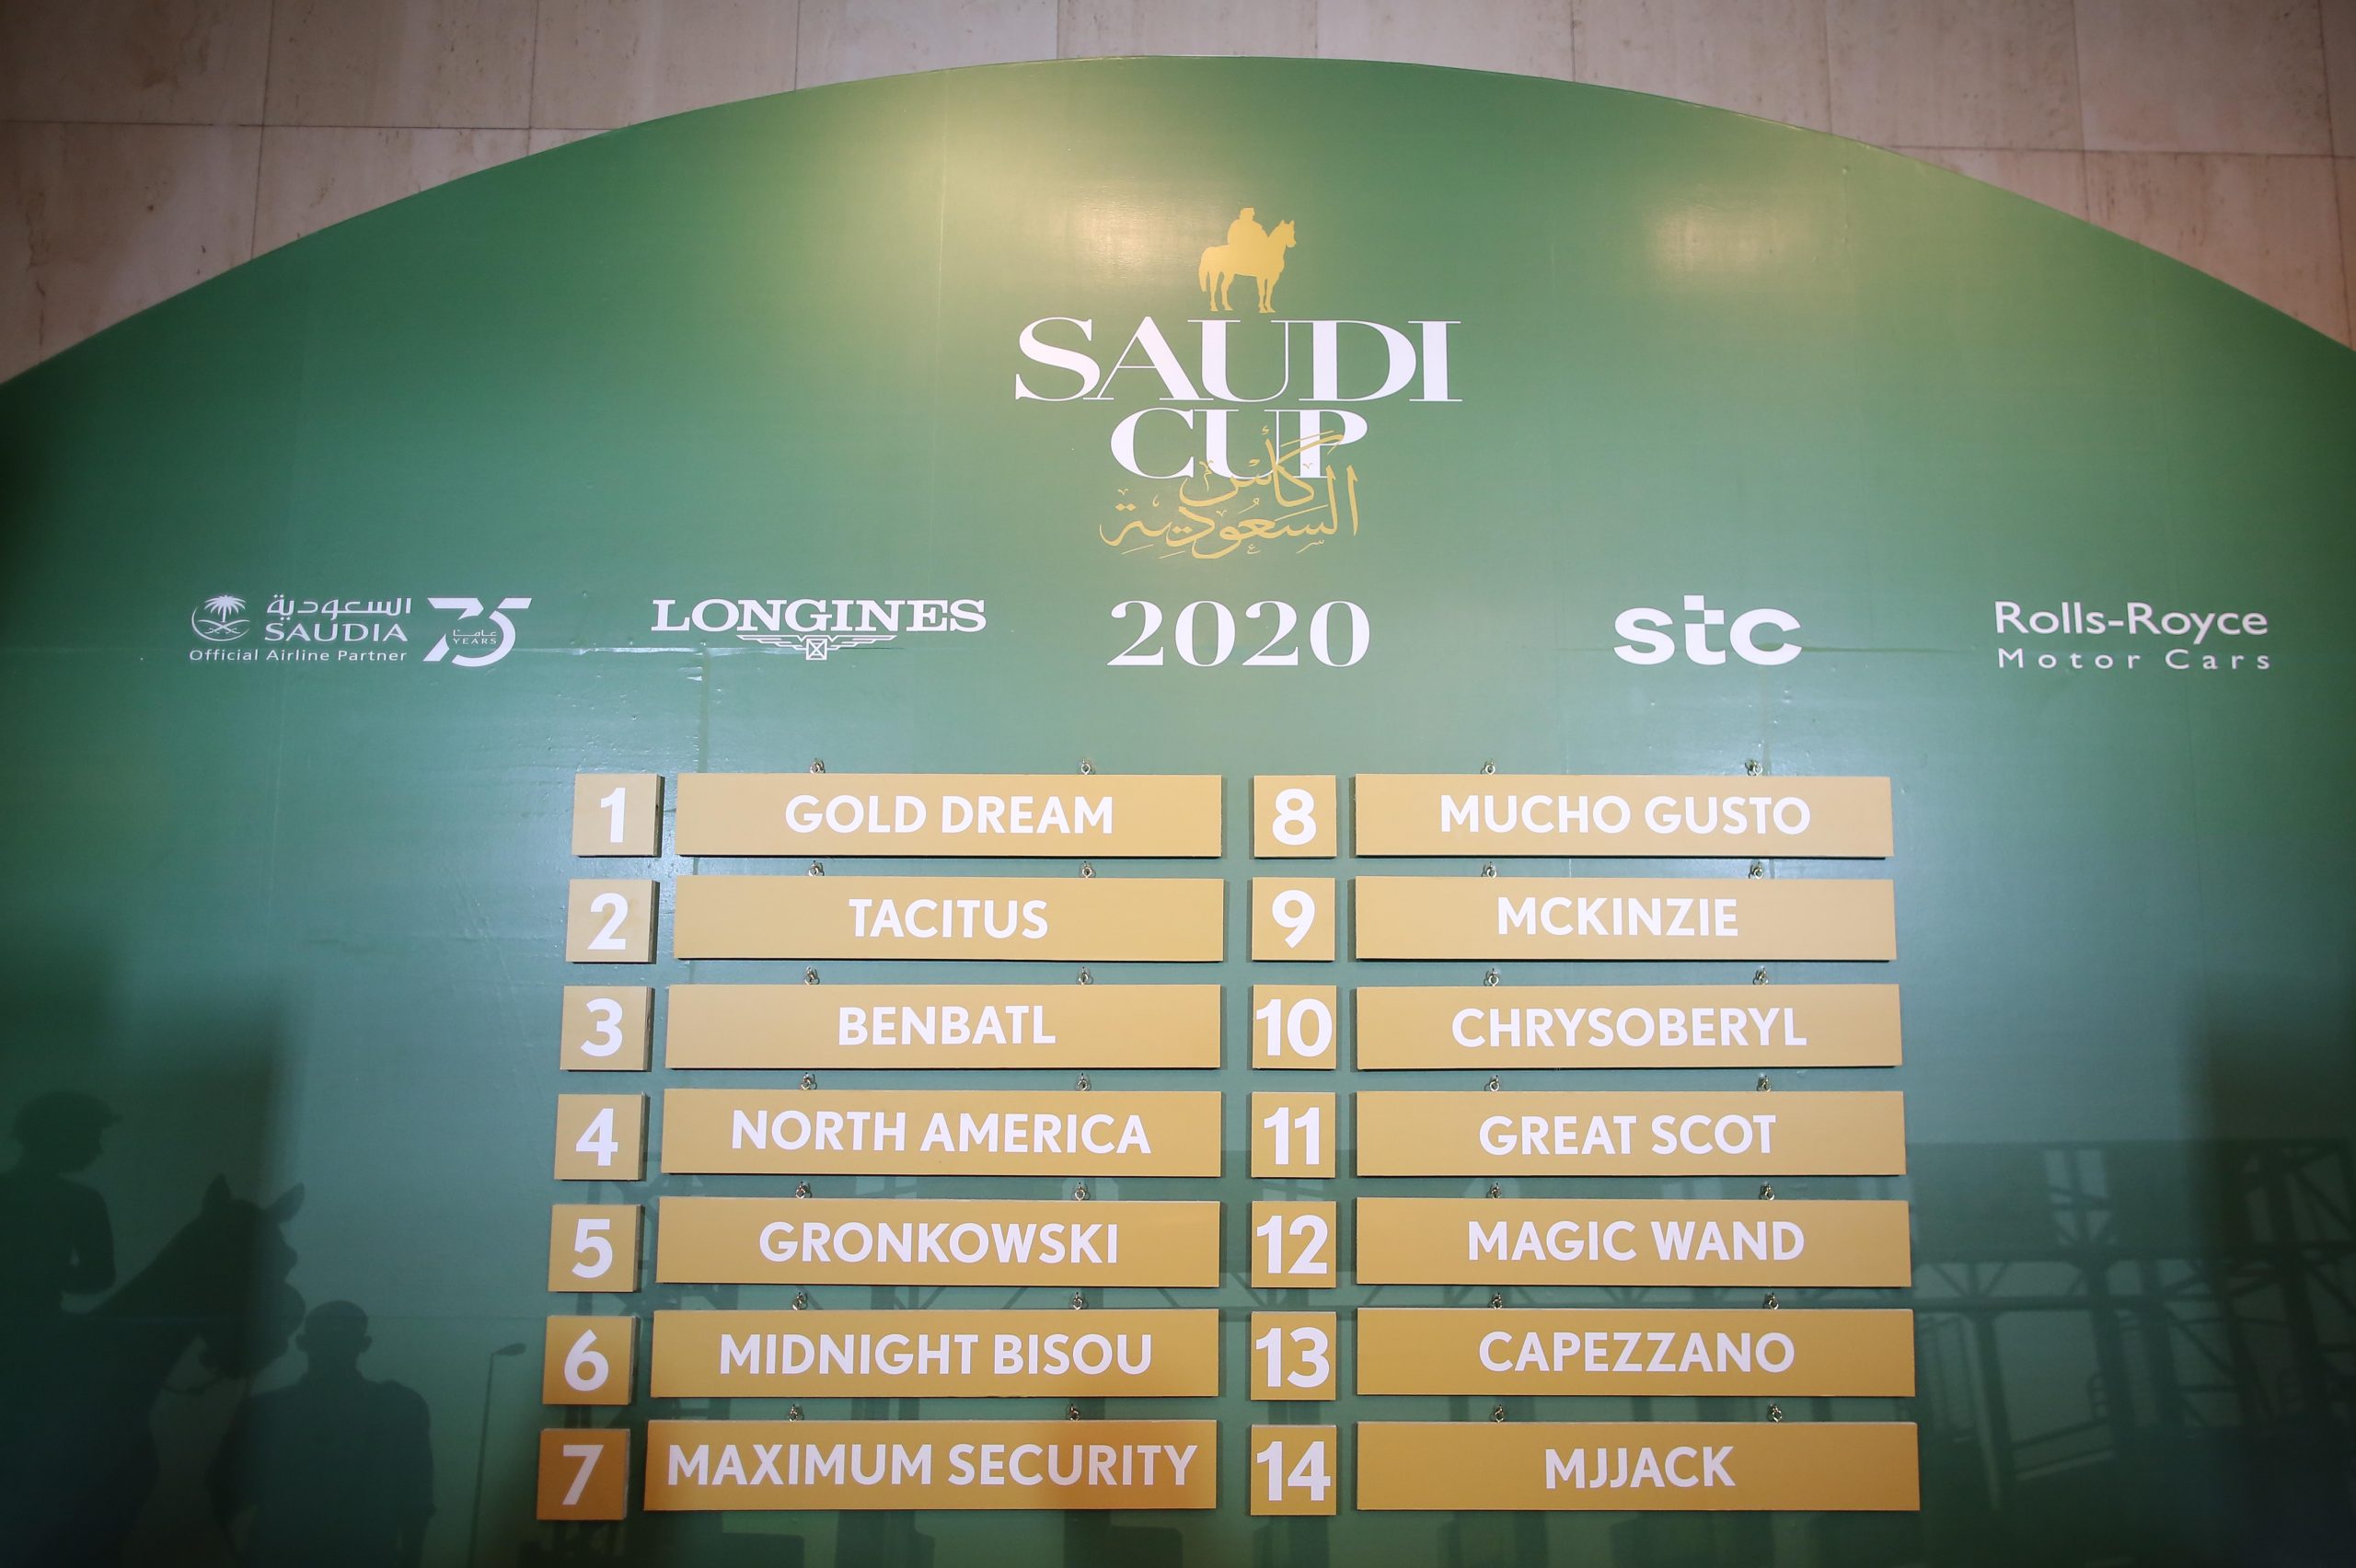 Saudi Cup 2020 Post Positions, Odds and Picks